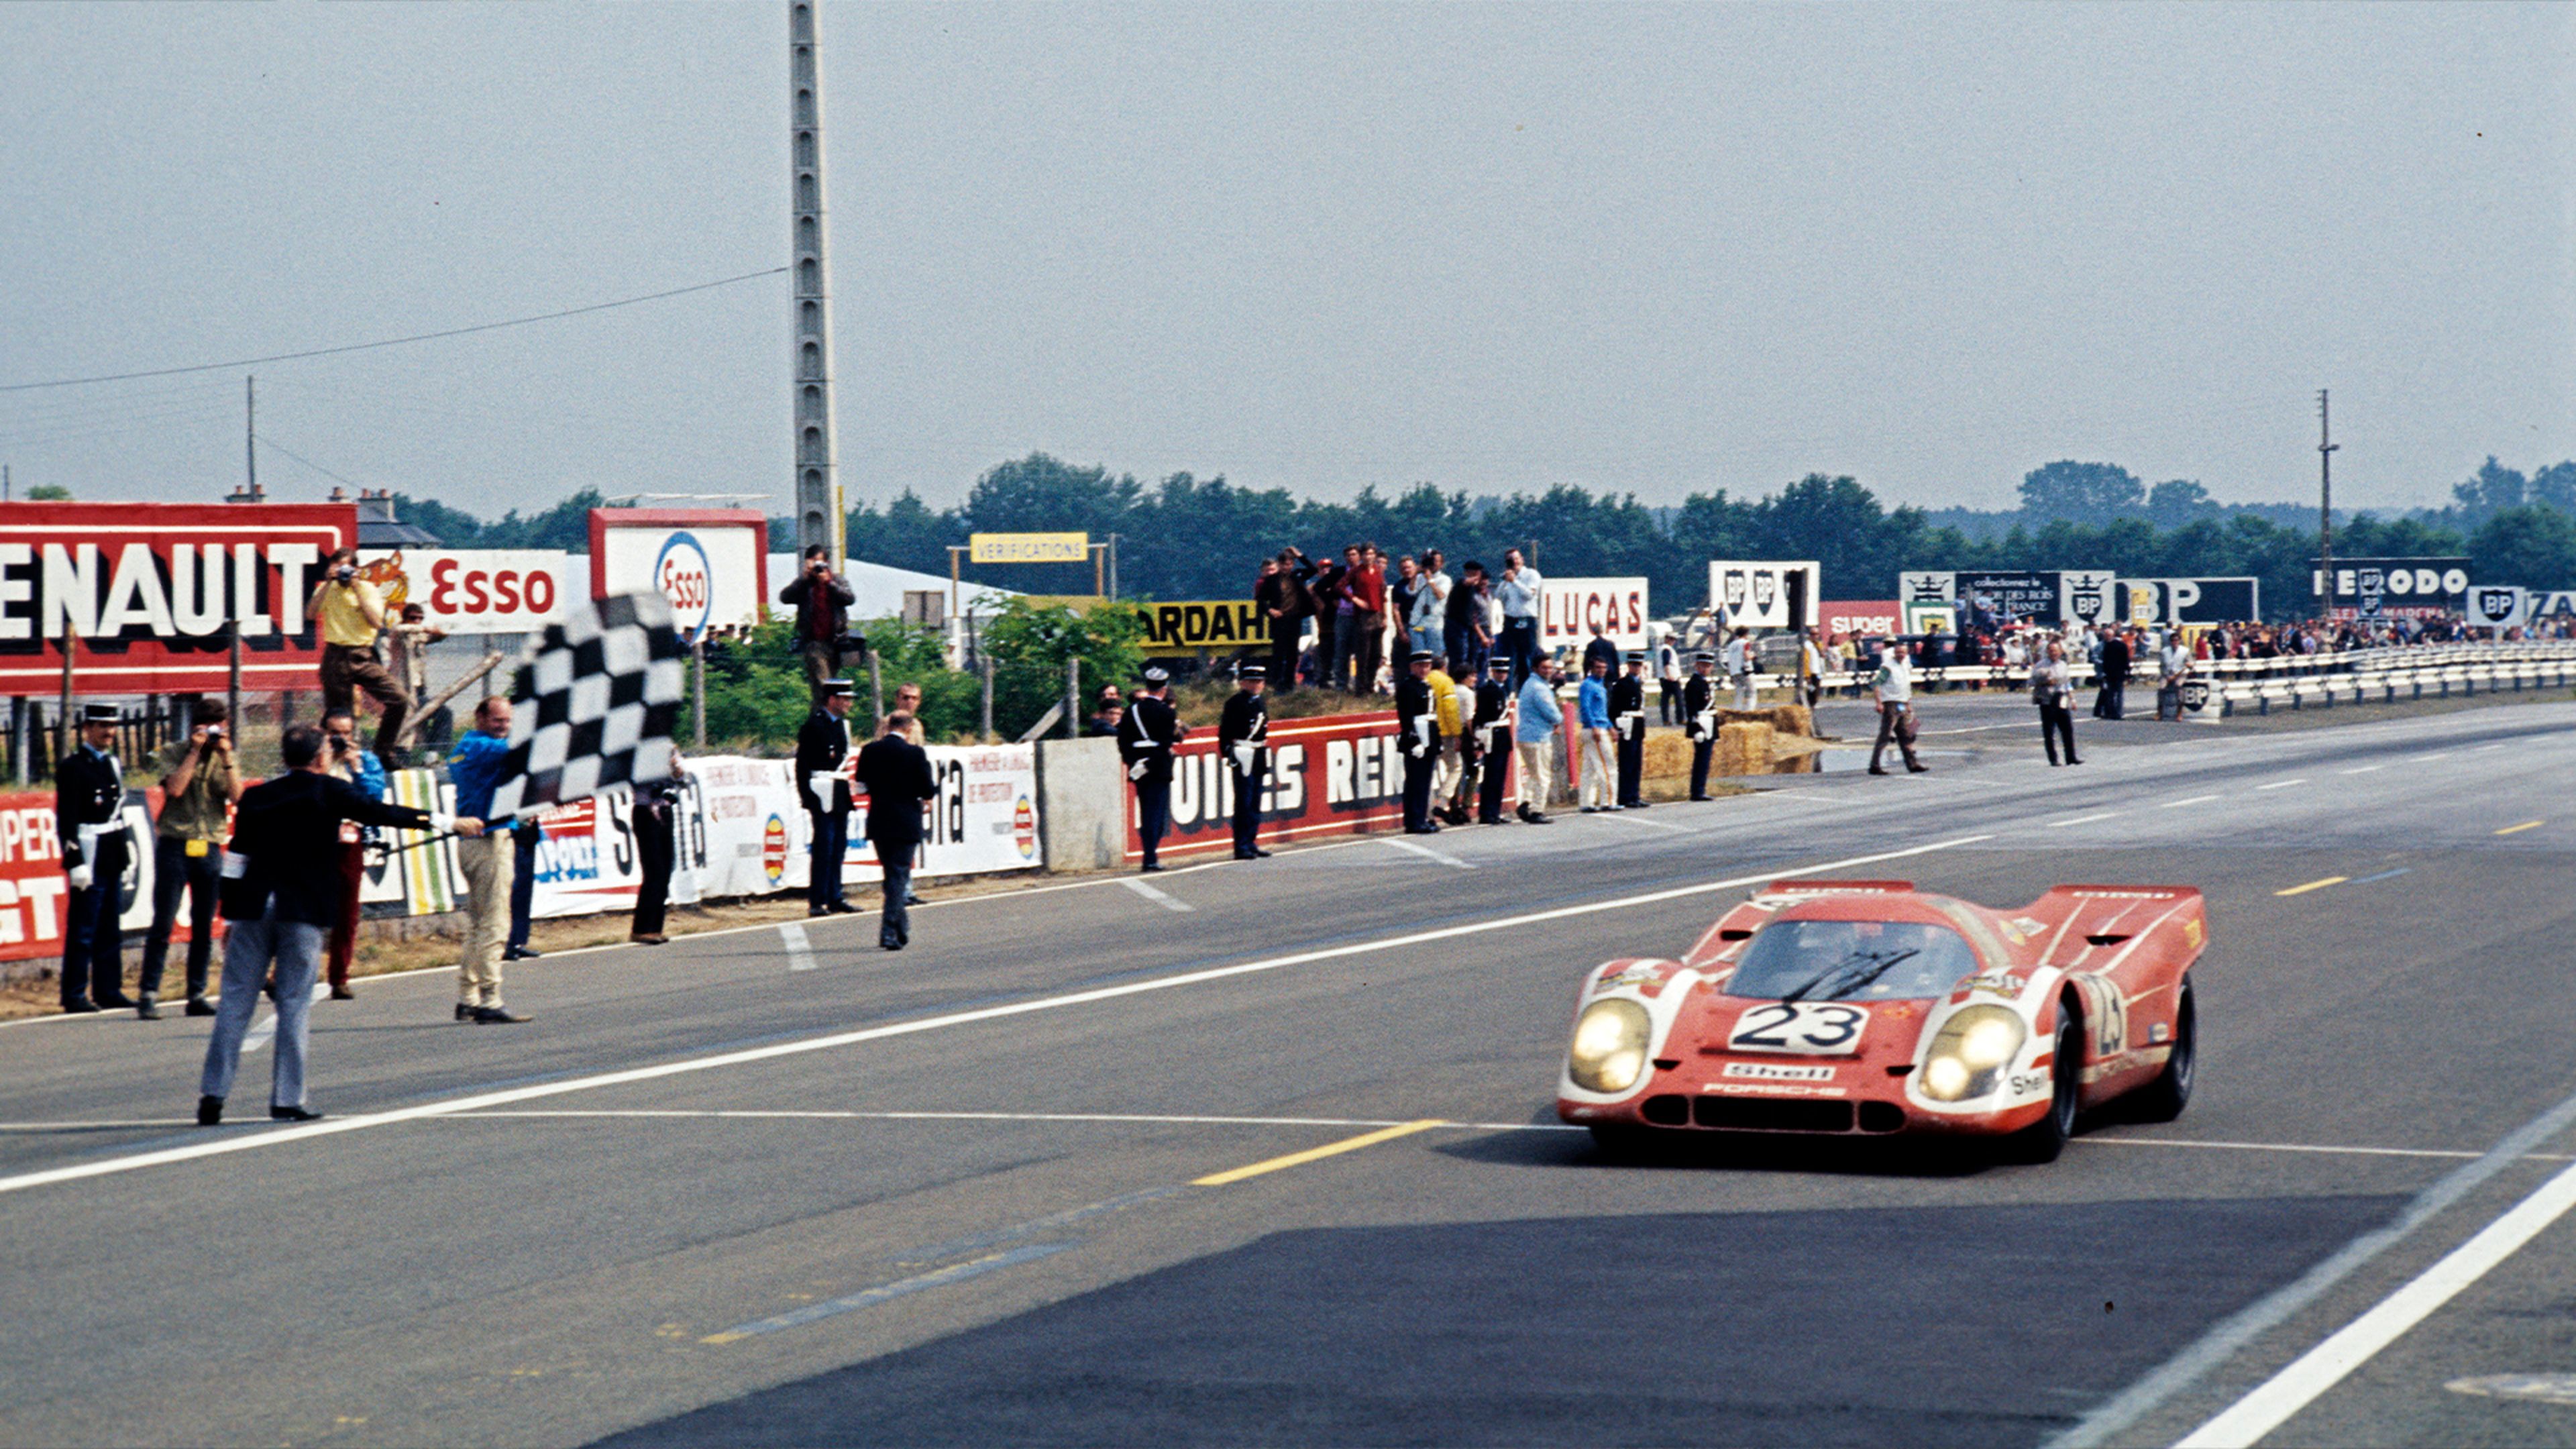 Llegada a la línea de meta de Le Mans del Porsche 917 KH #23 conducido por Dicky Attwood.